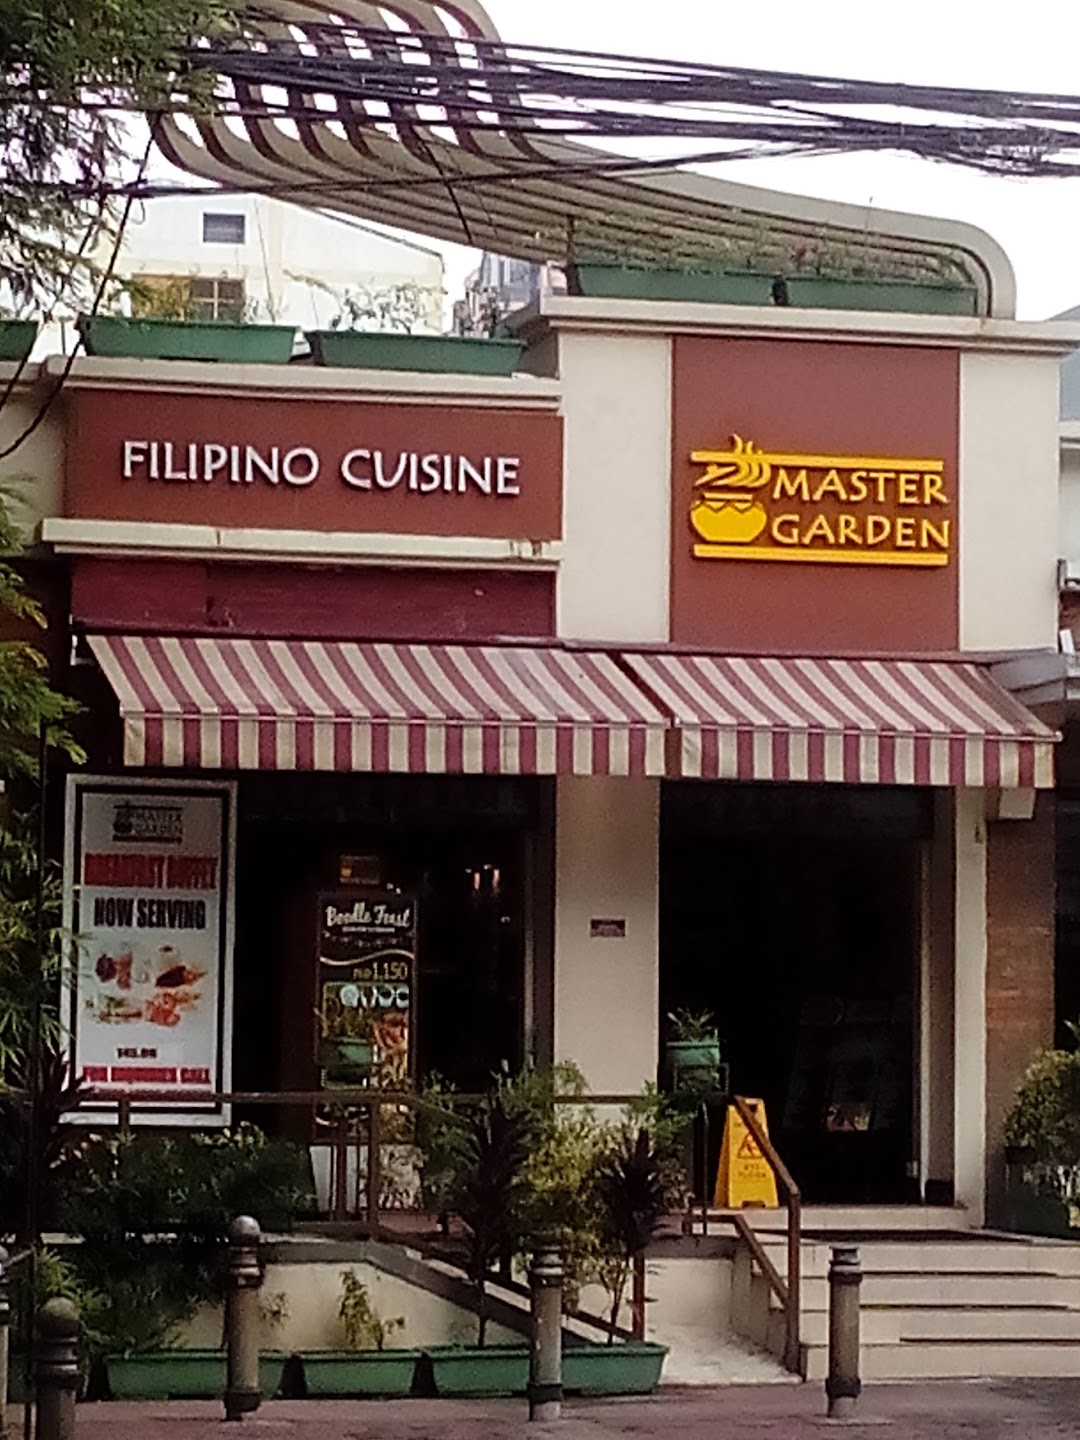 Master Garden Filipino Cuisine